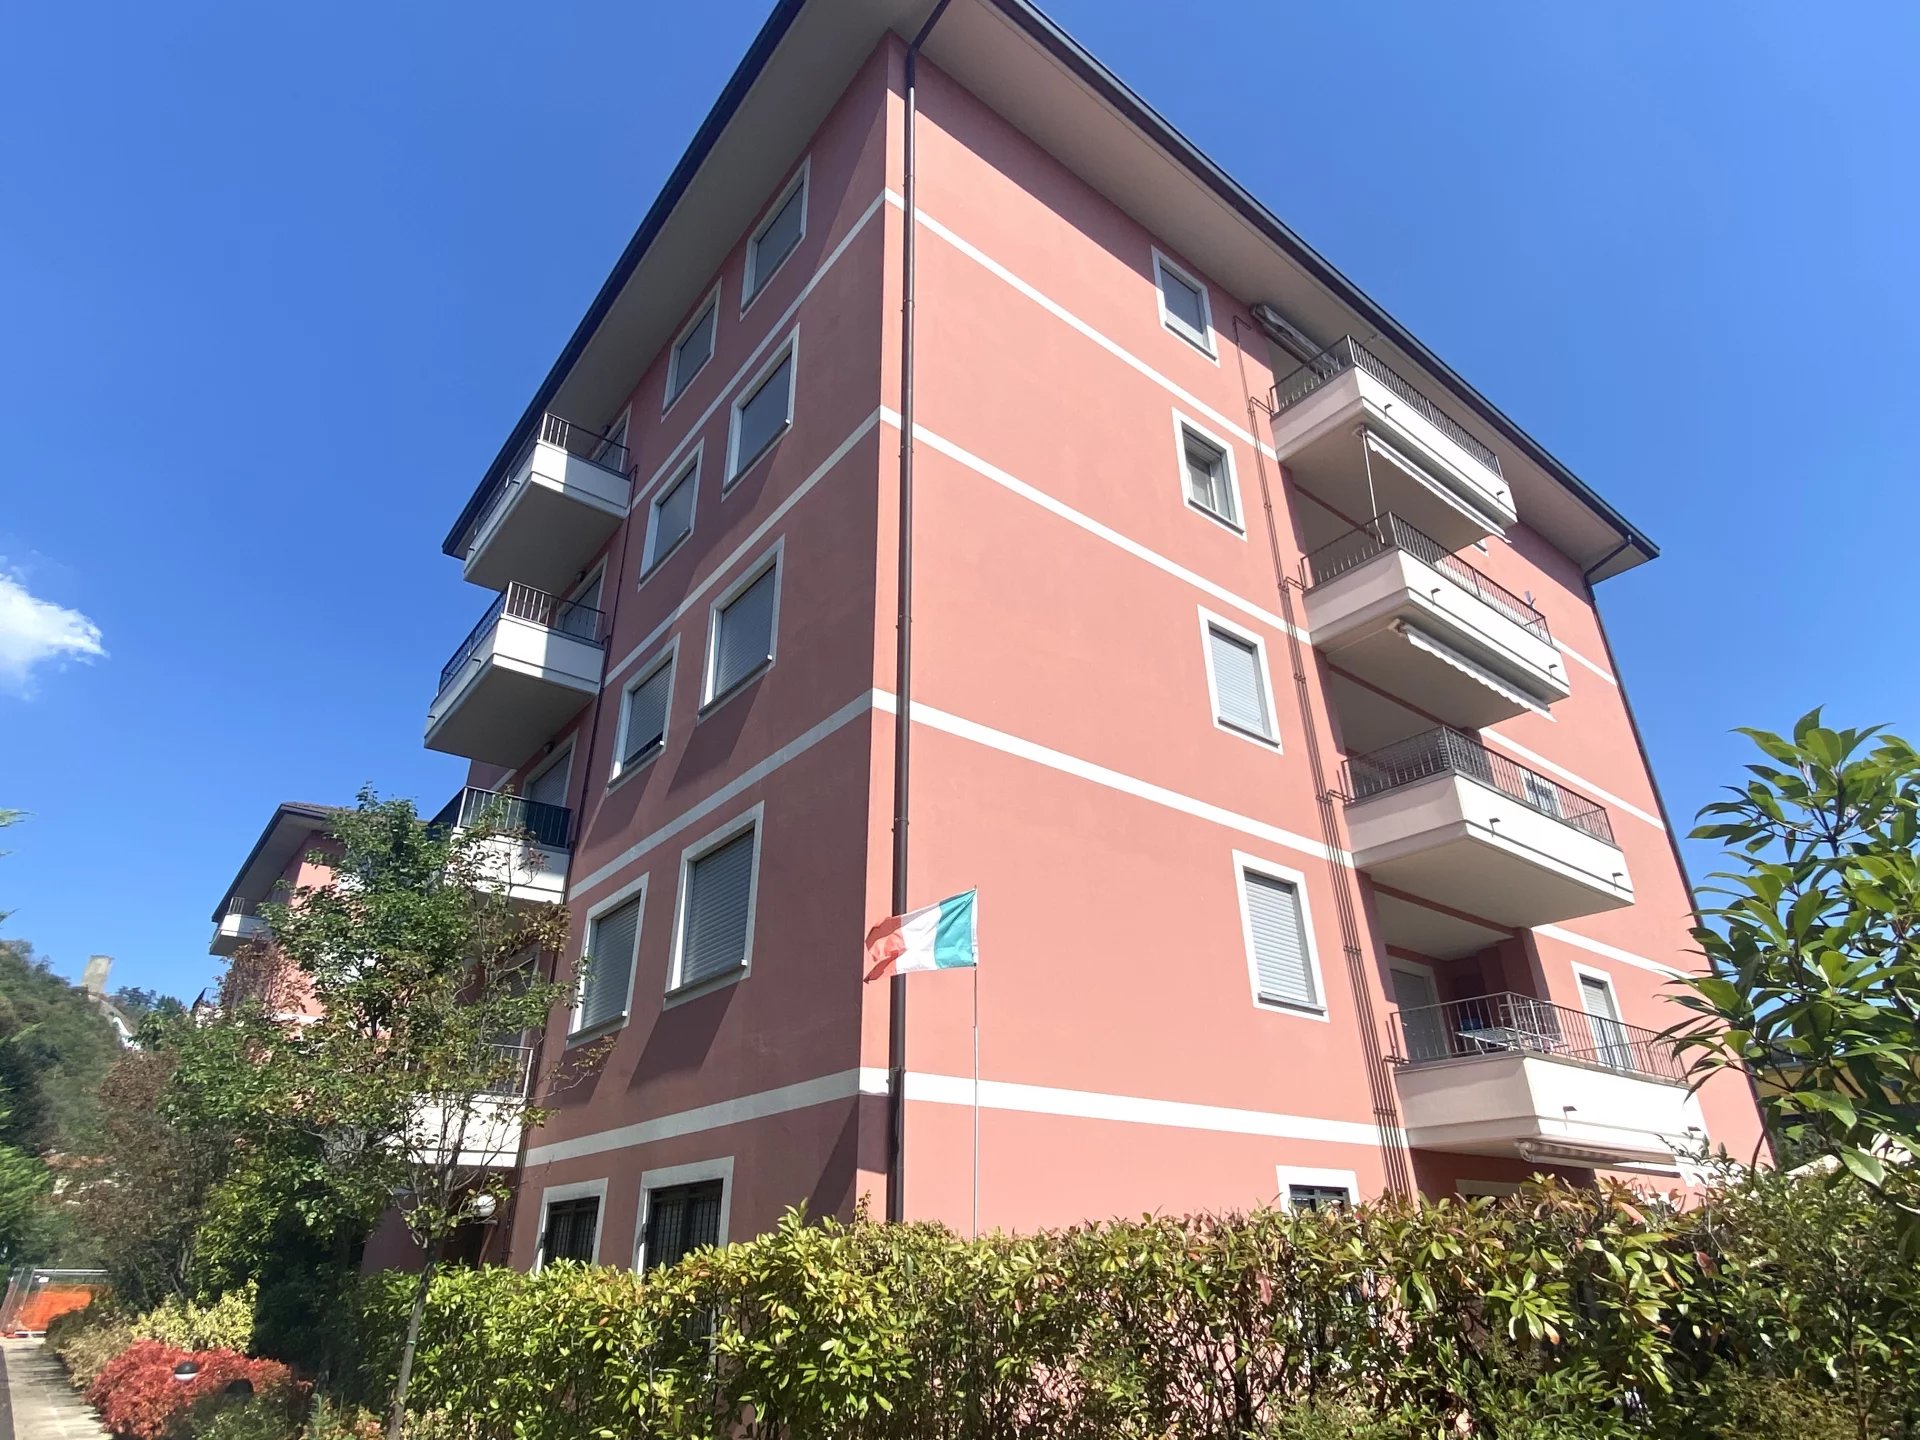 Sale Apartment - Como - Italy